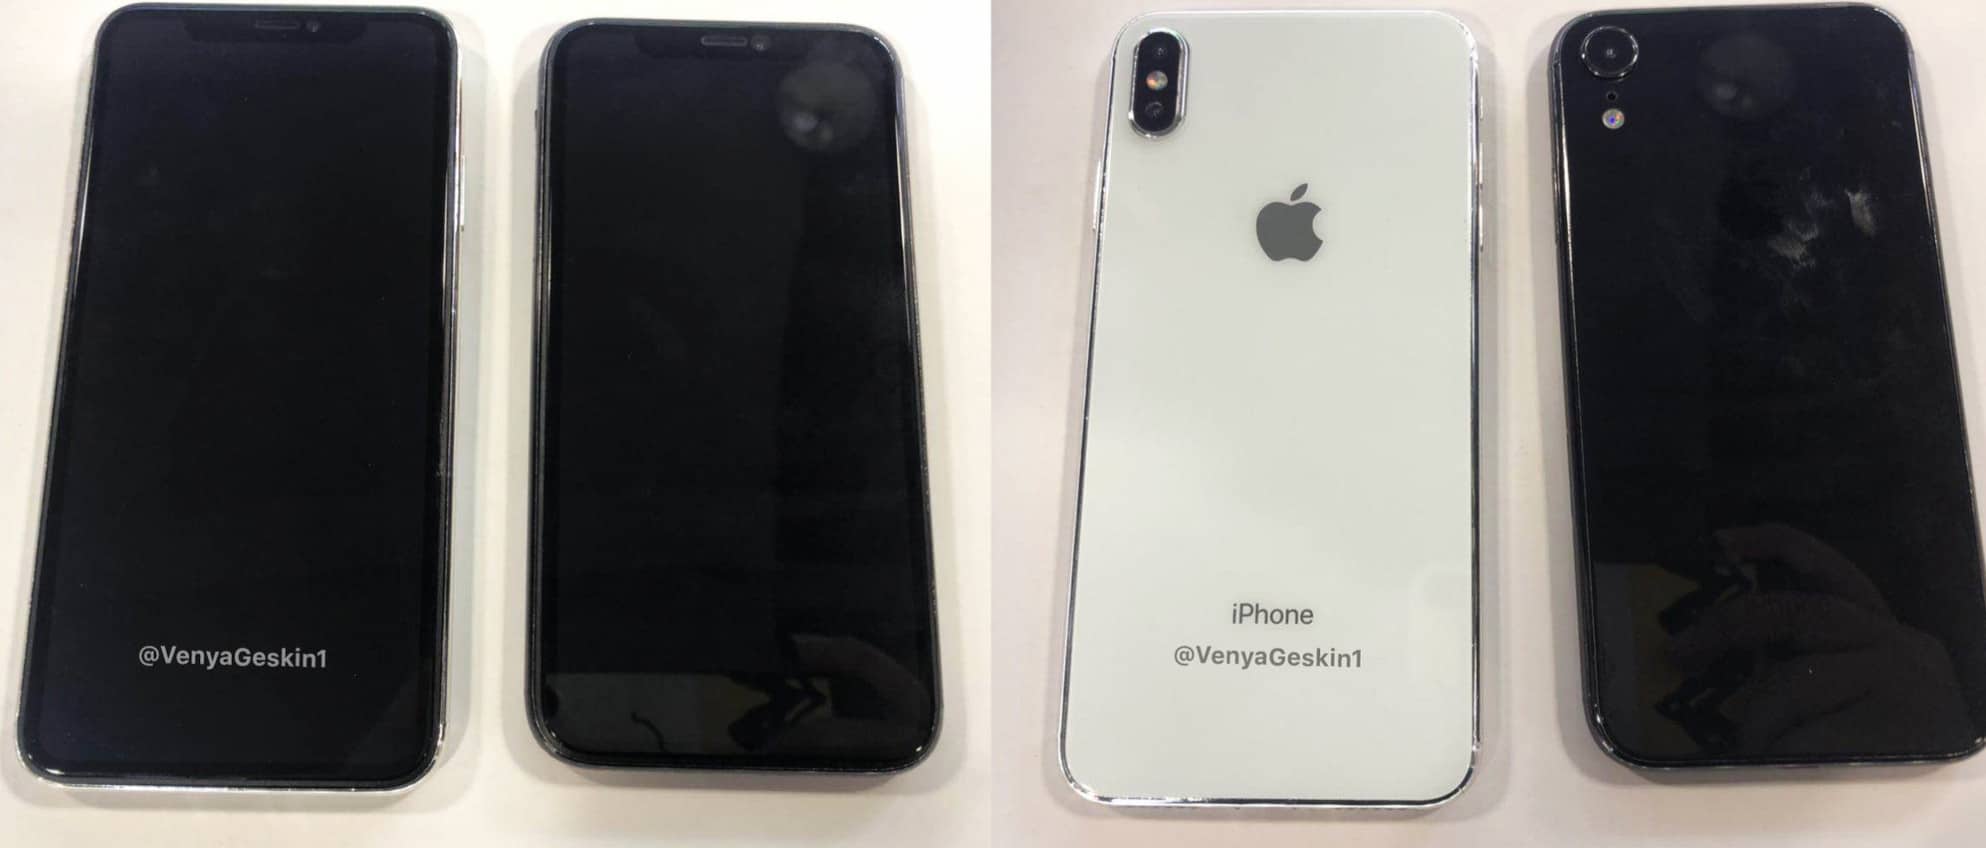 New iPhones 2018